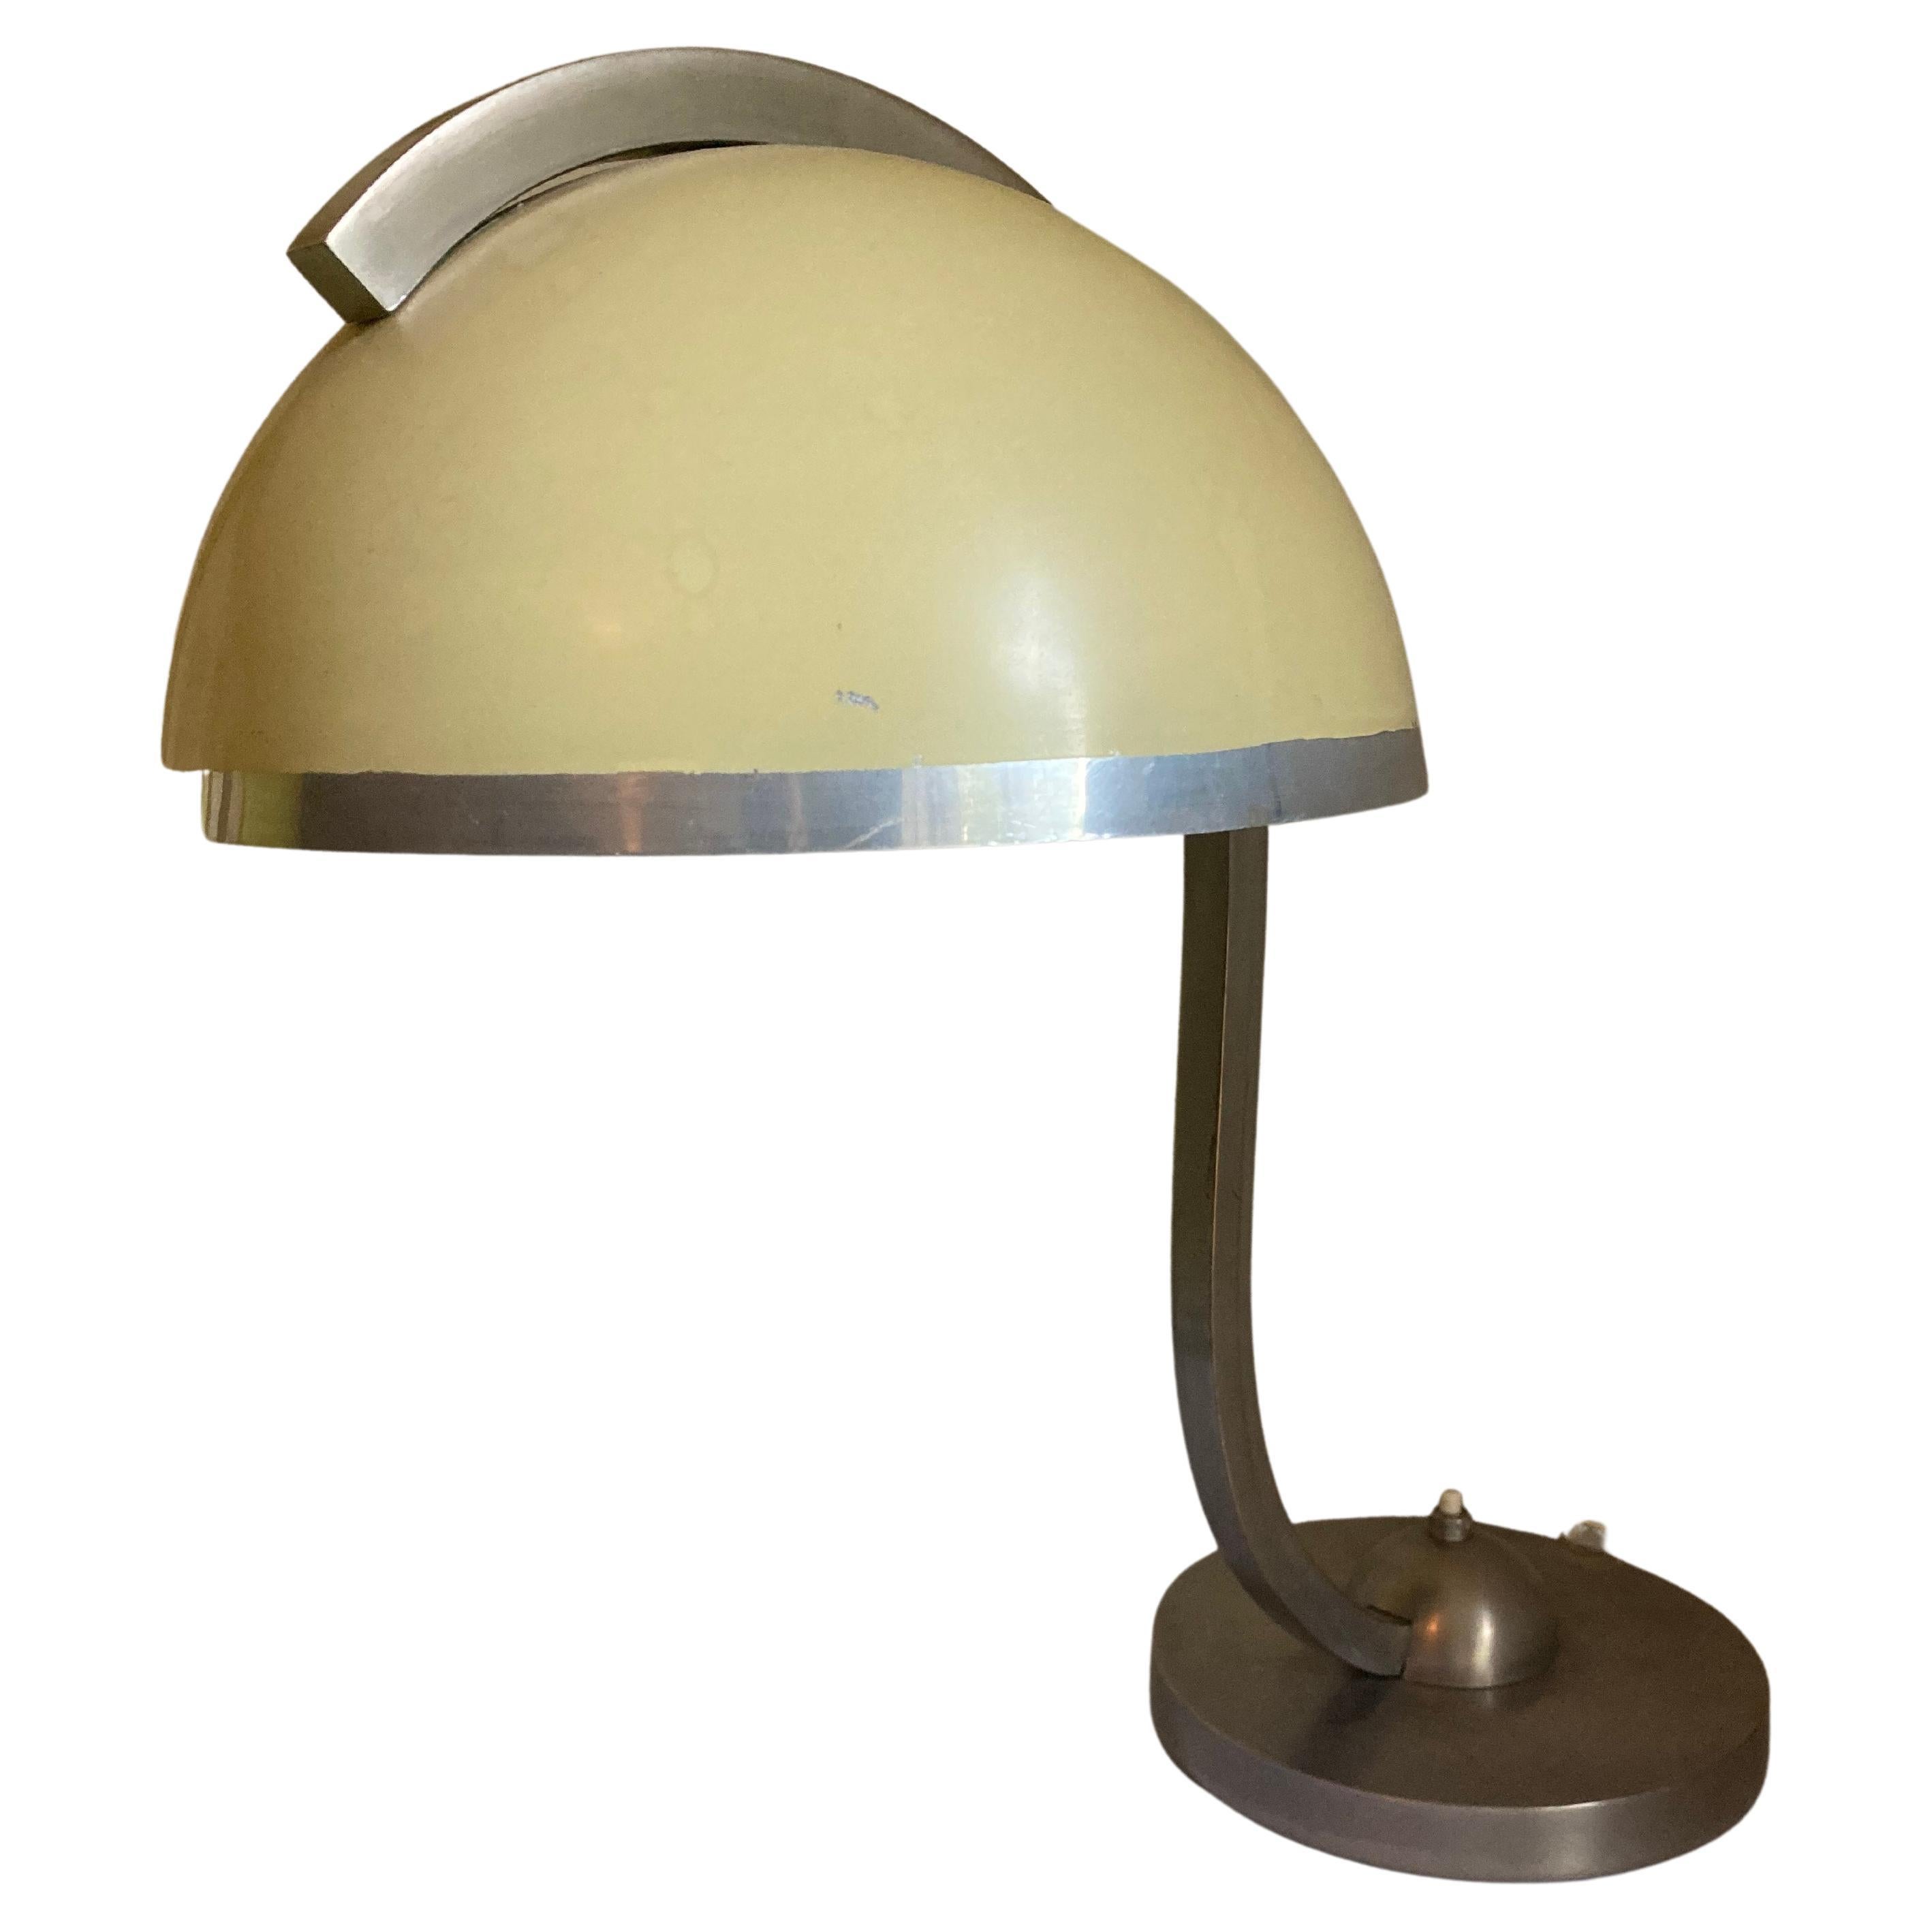 Art Deco, Bauhaus Table Lamp, Industrial Design 1930s